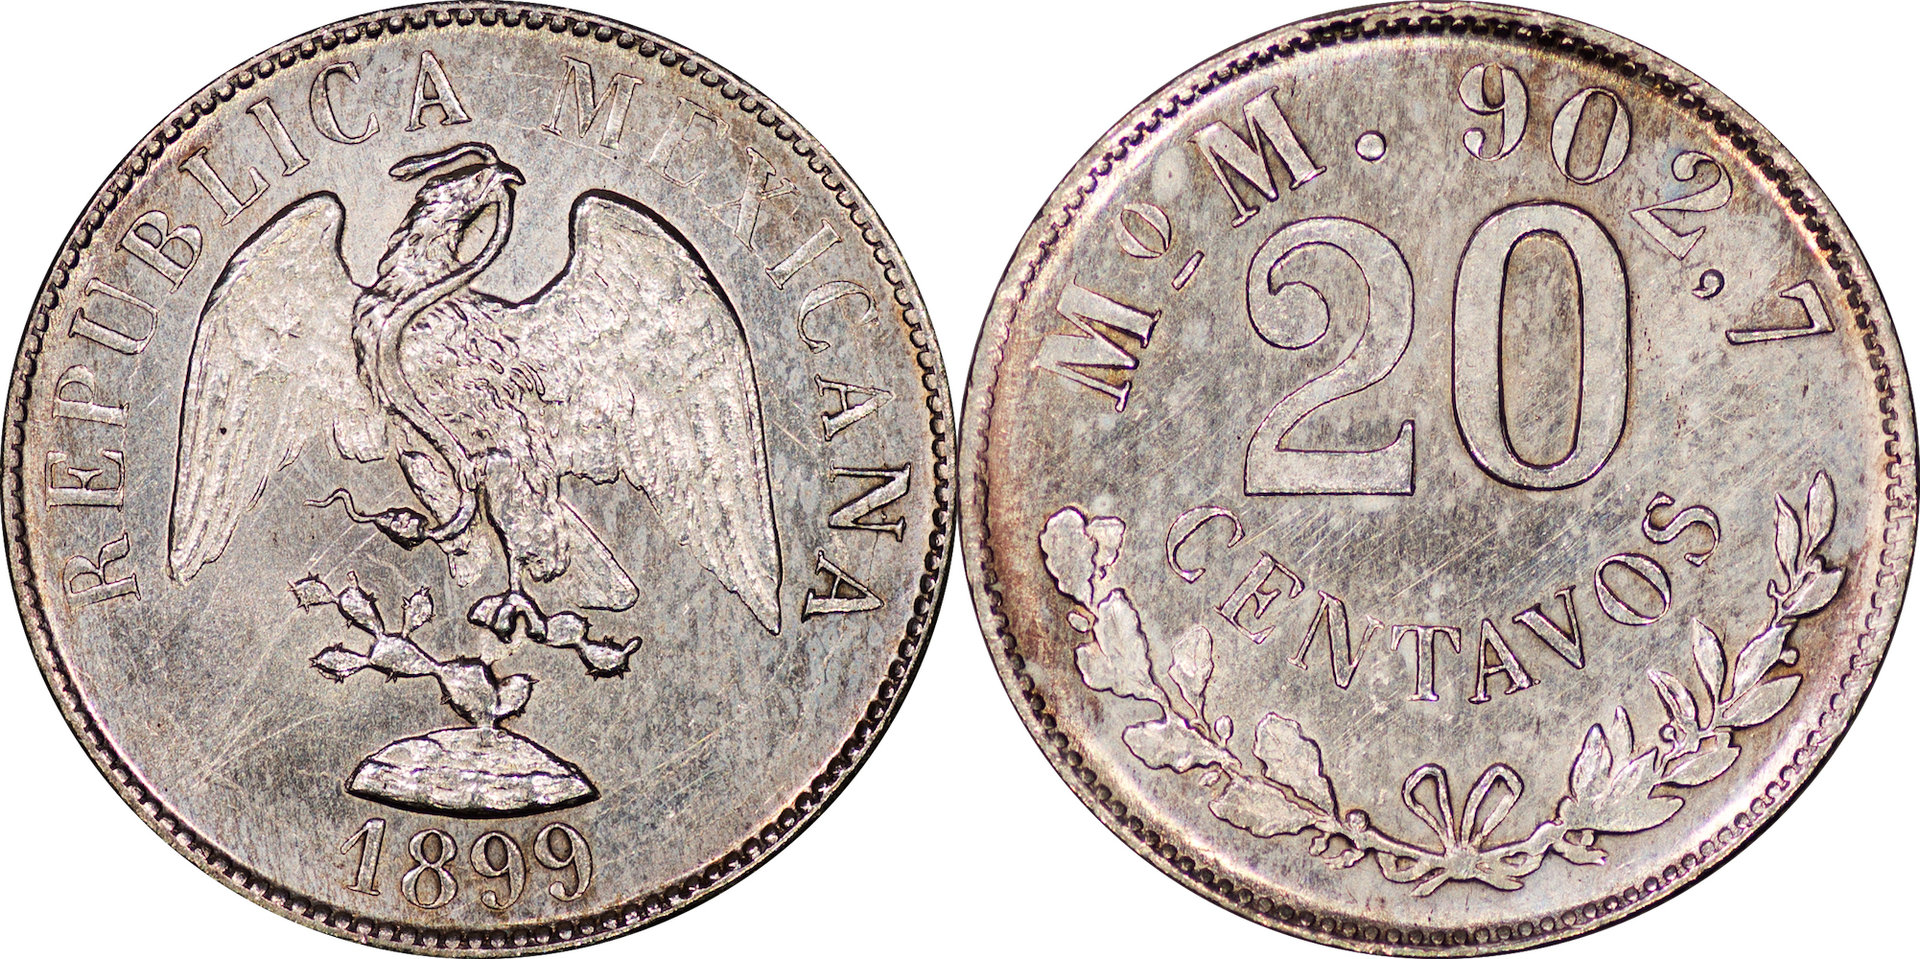 Mexico - 1899 20 Centavos.jpg